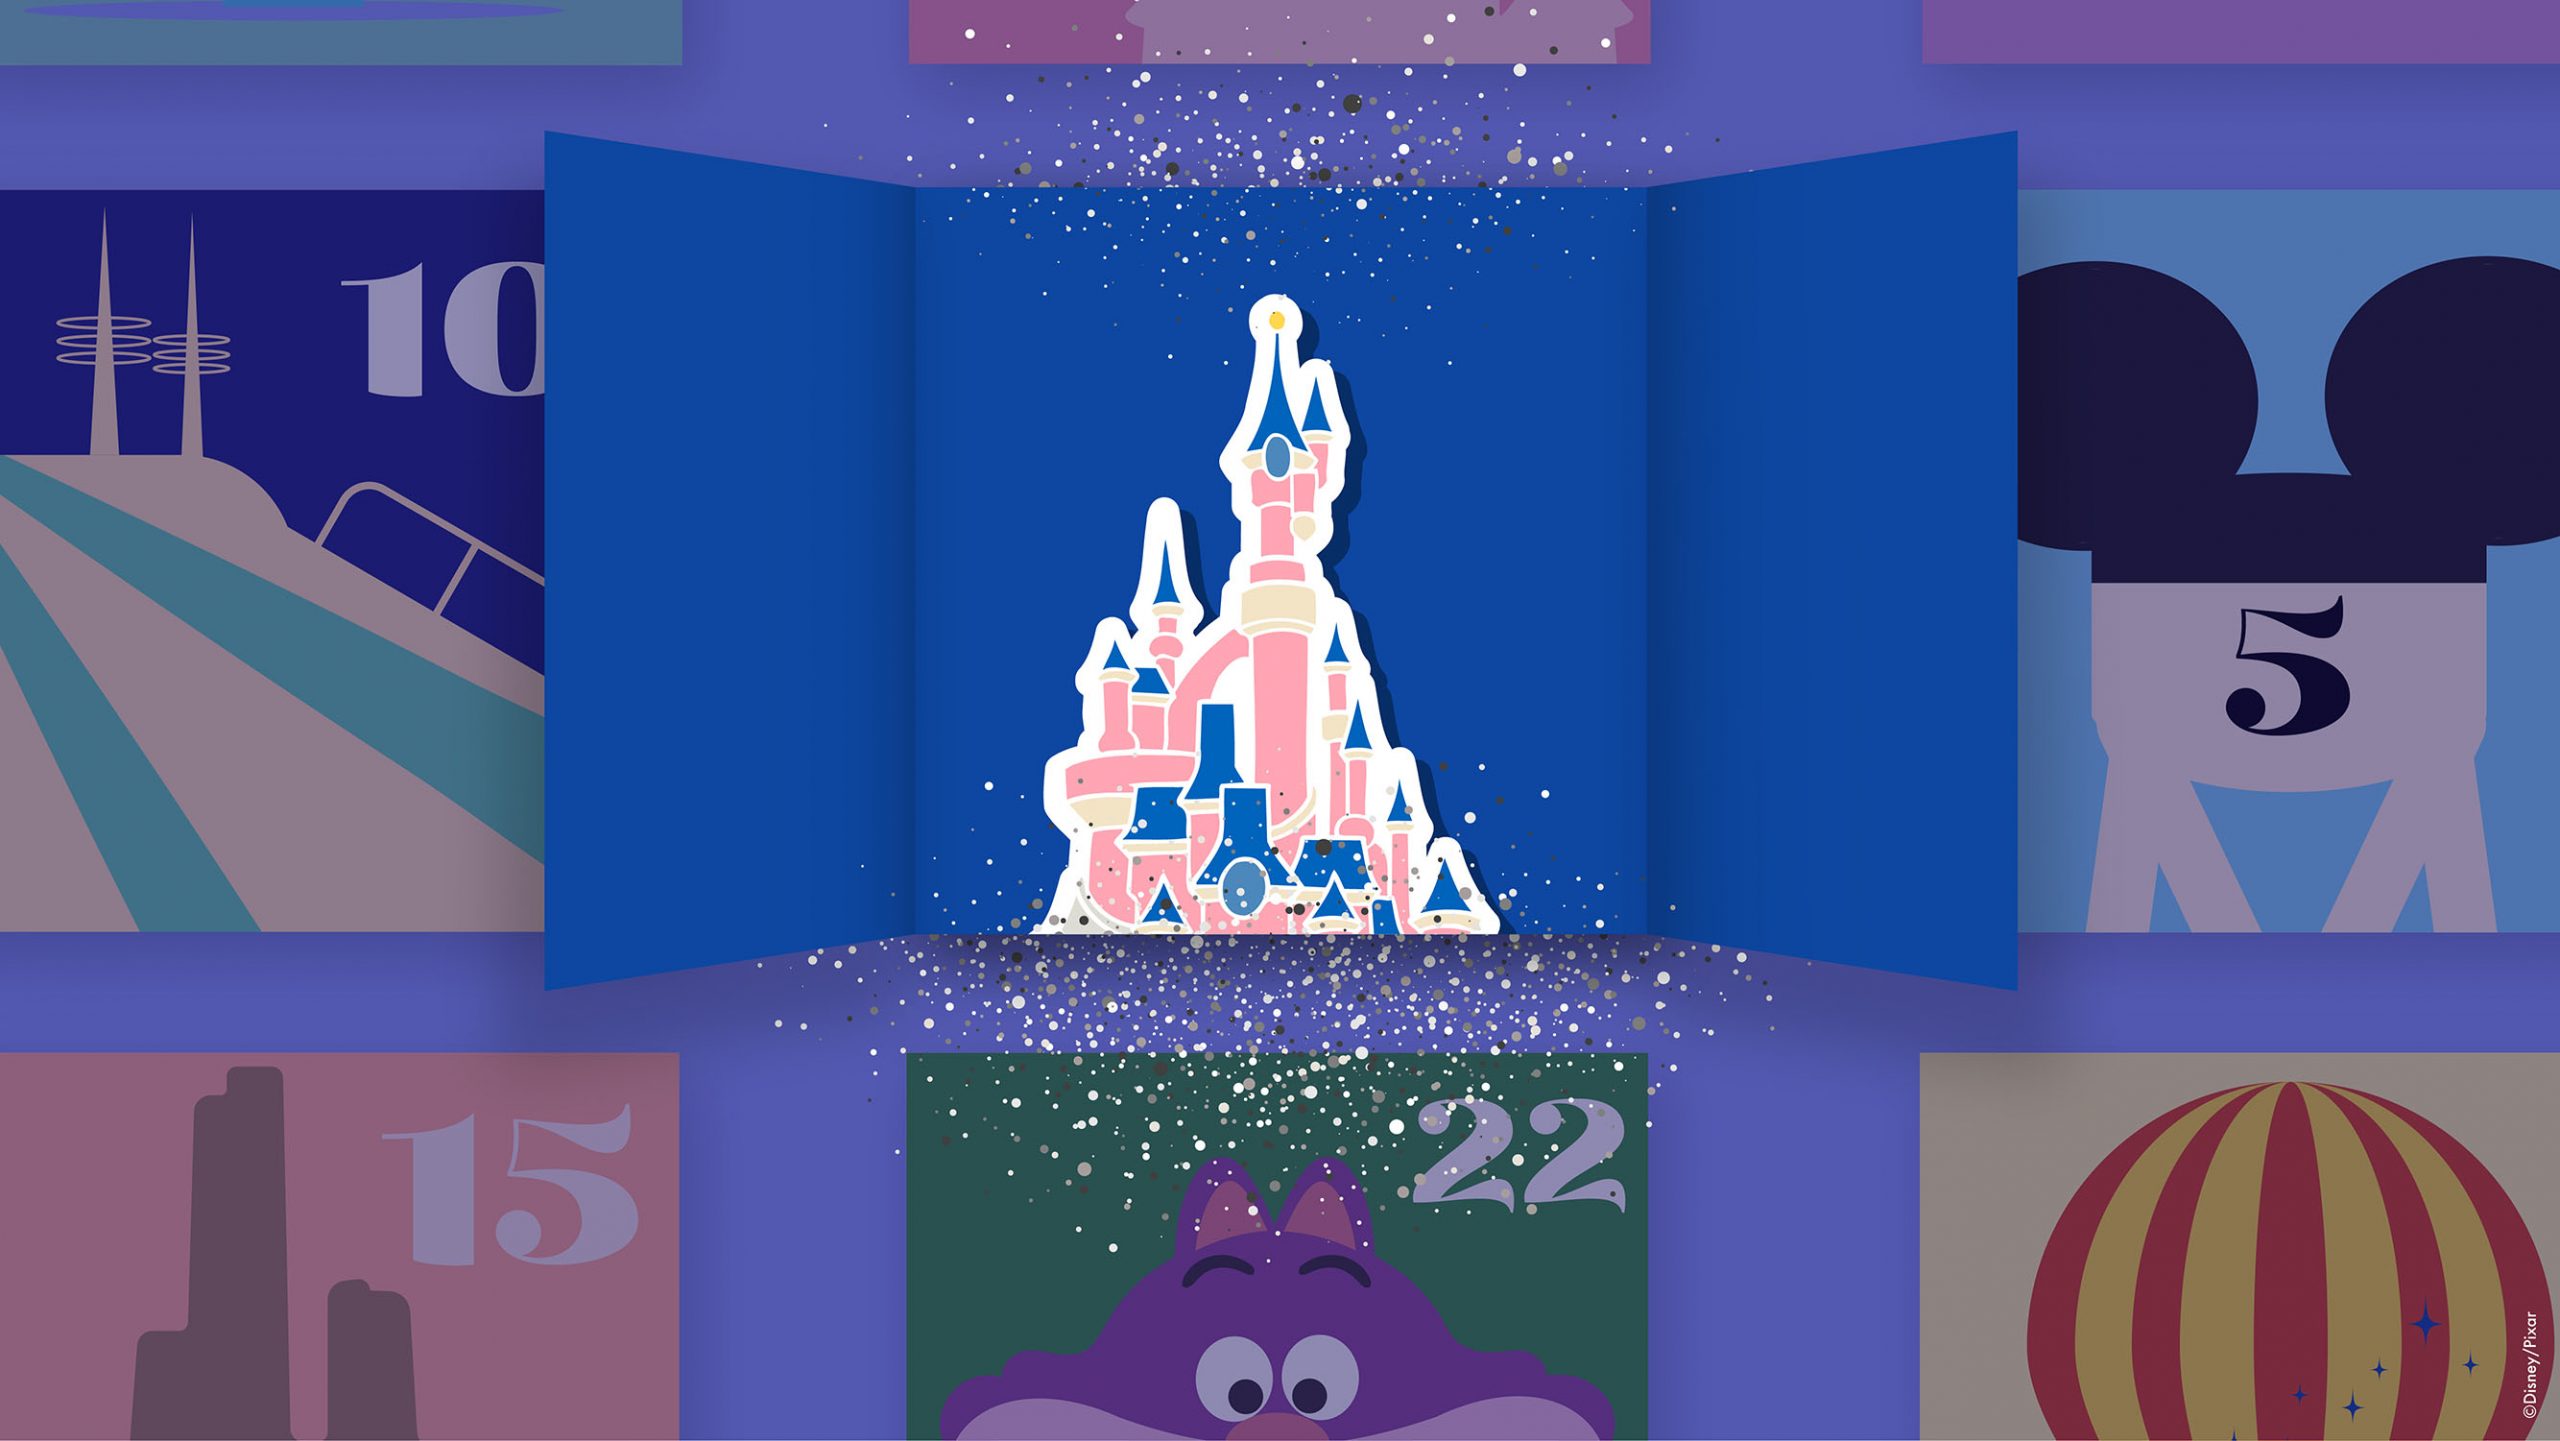 Disneyland Paris is offering a free digital Advent Calendar full of surprises including famous celebrities